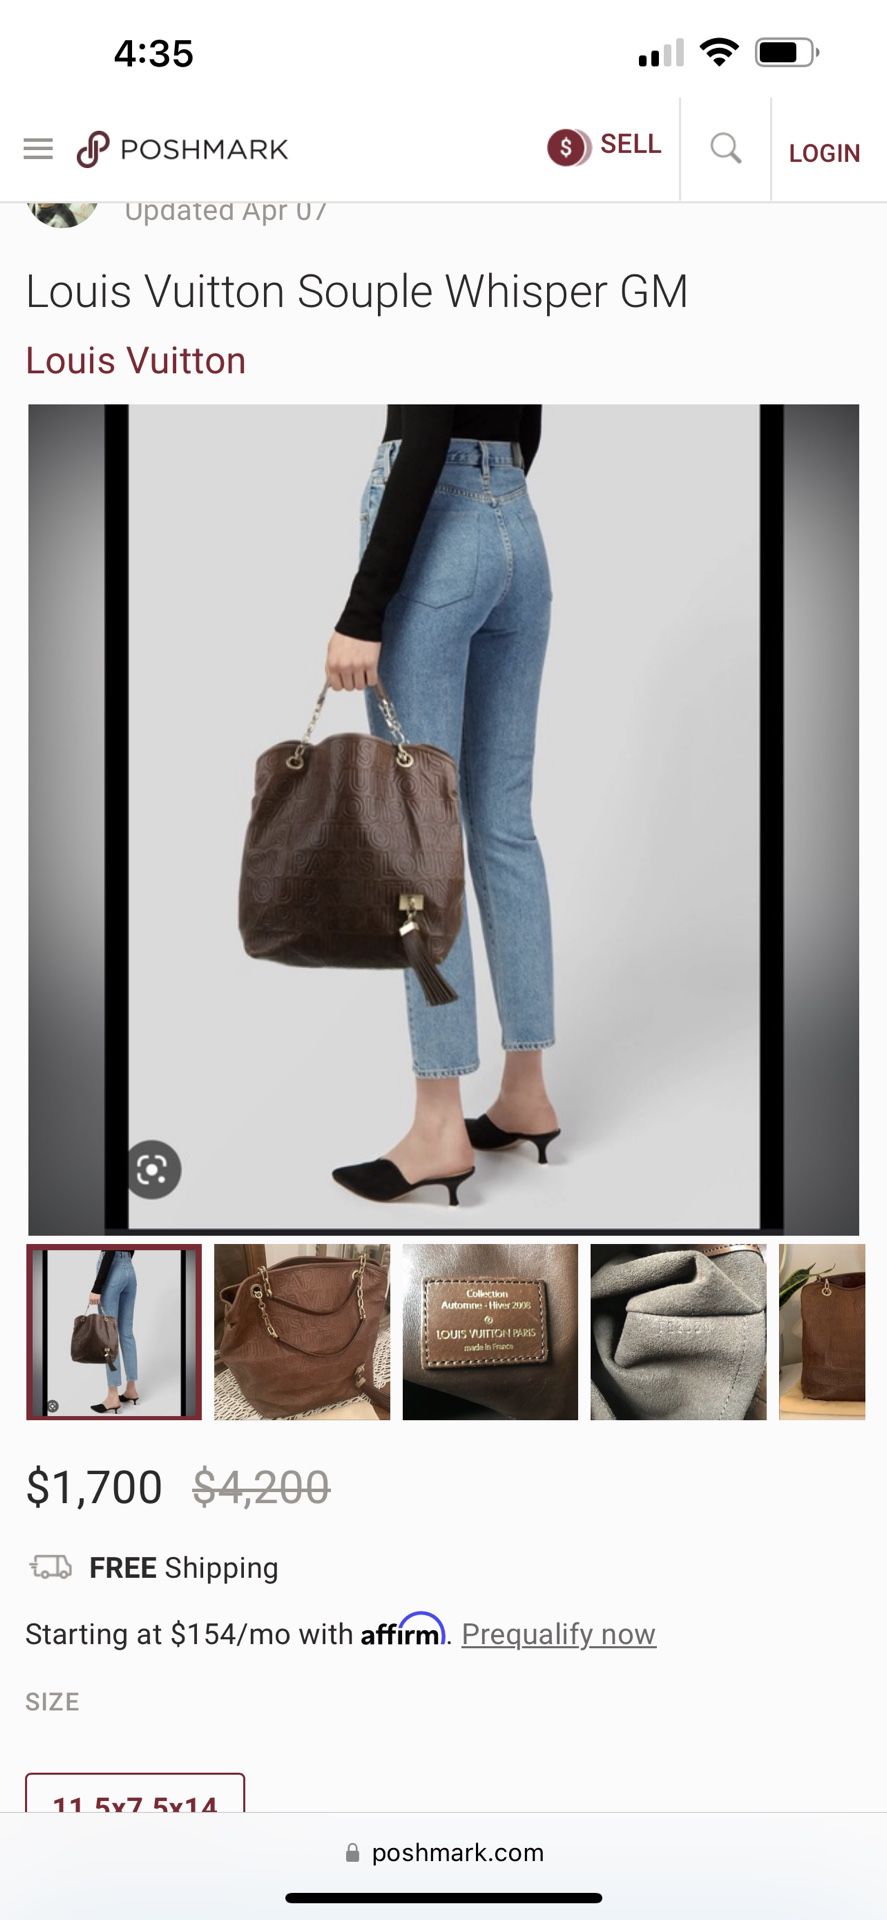 Louis Vuitton Whisper Bag